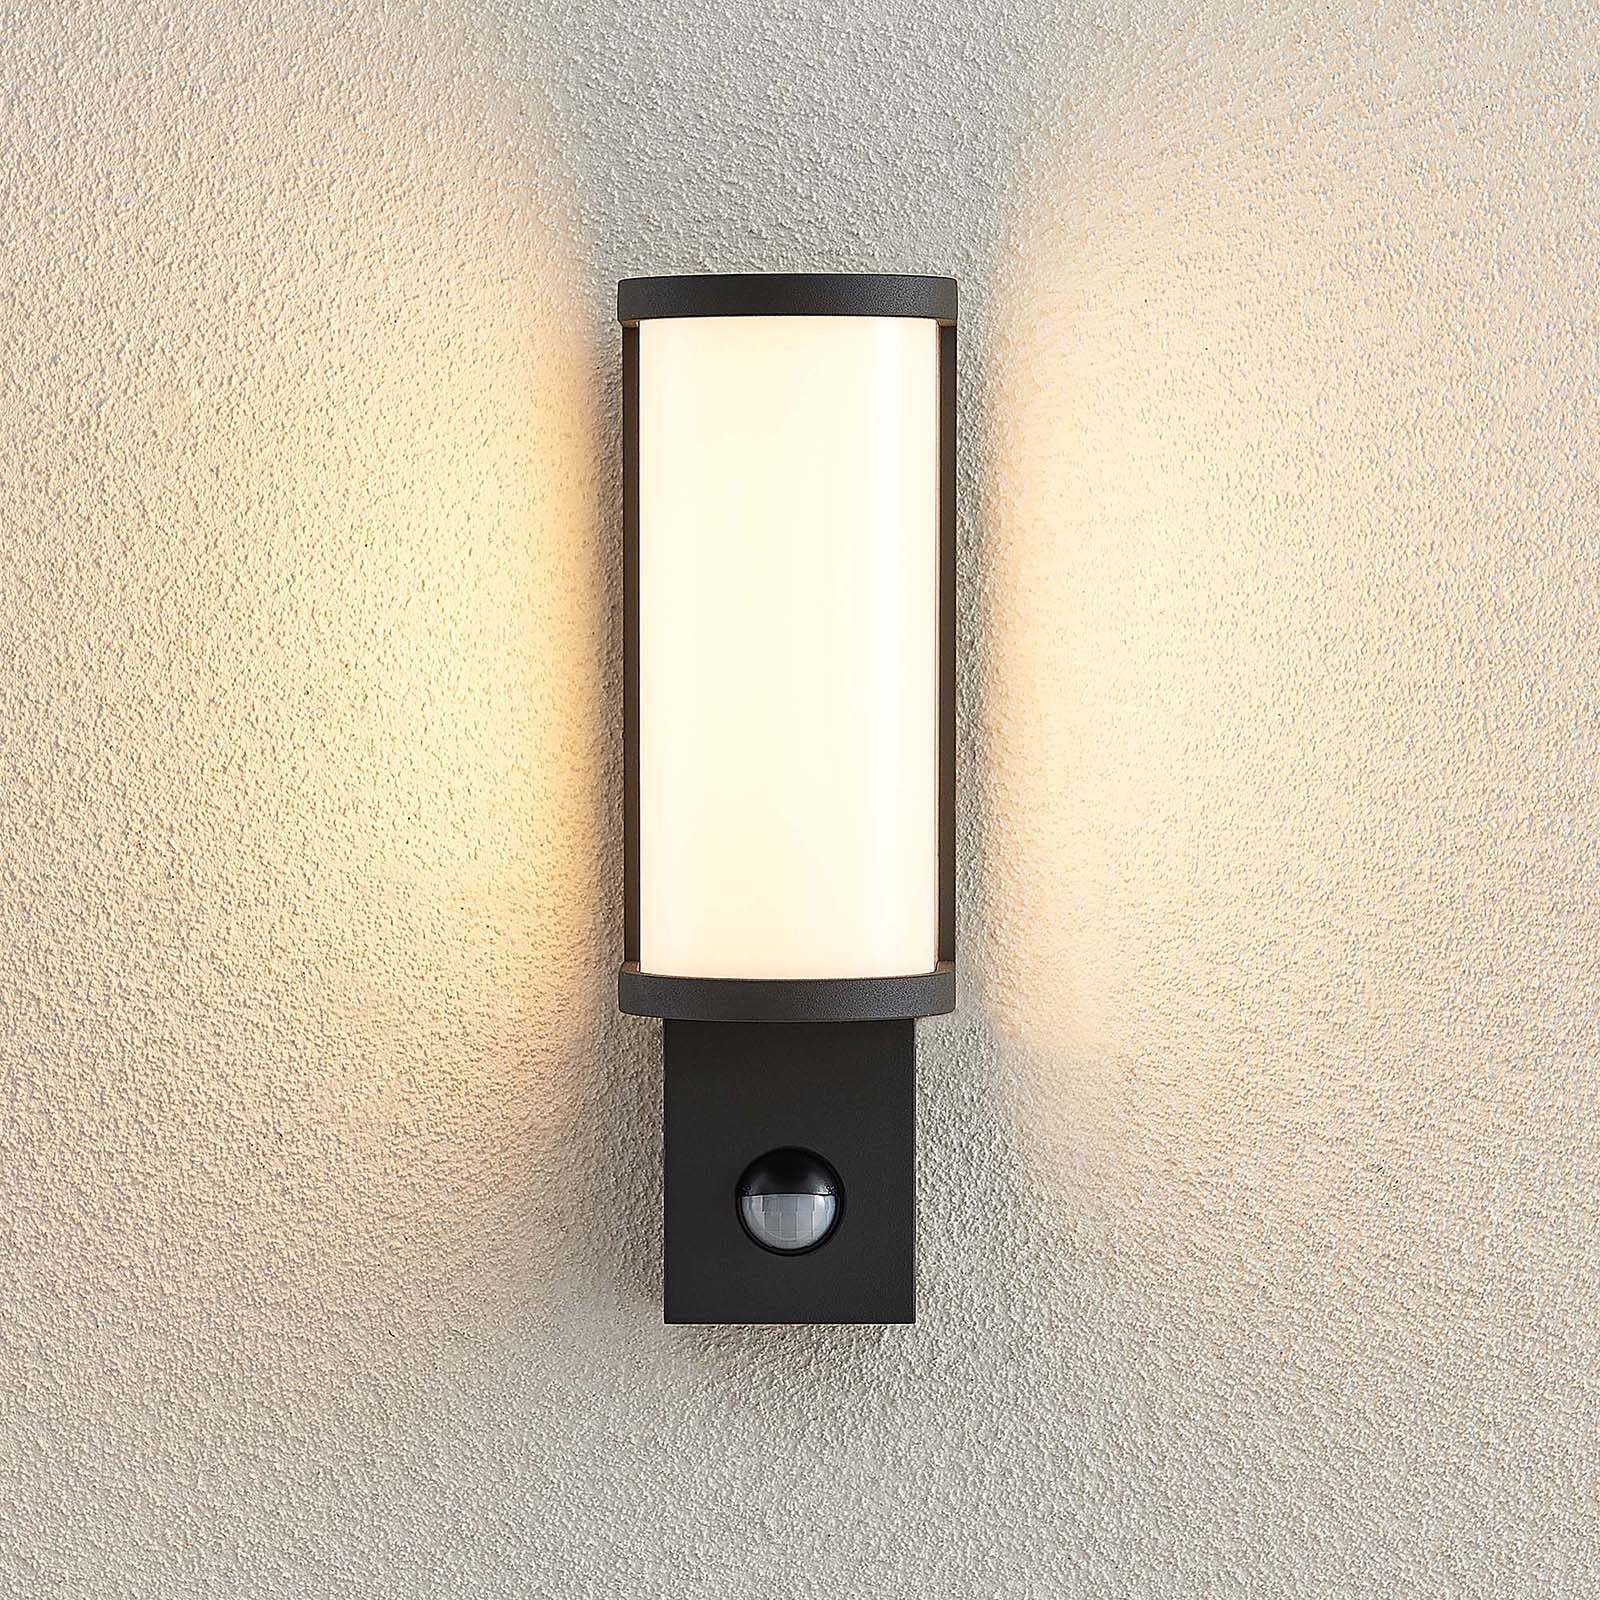 Lucande Jokum LED-Außenwandlampe, IP54, Sensor